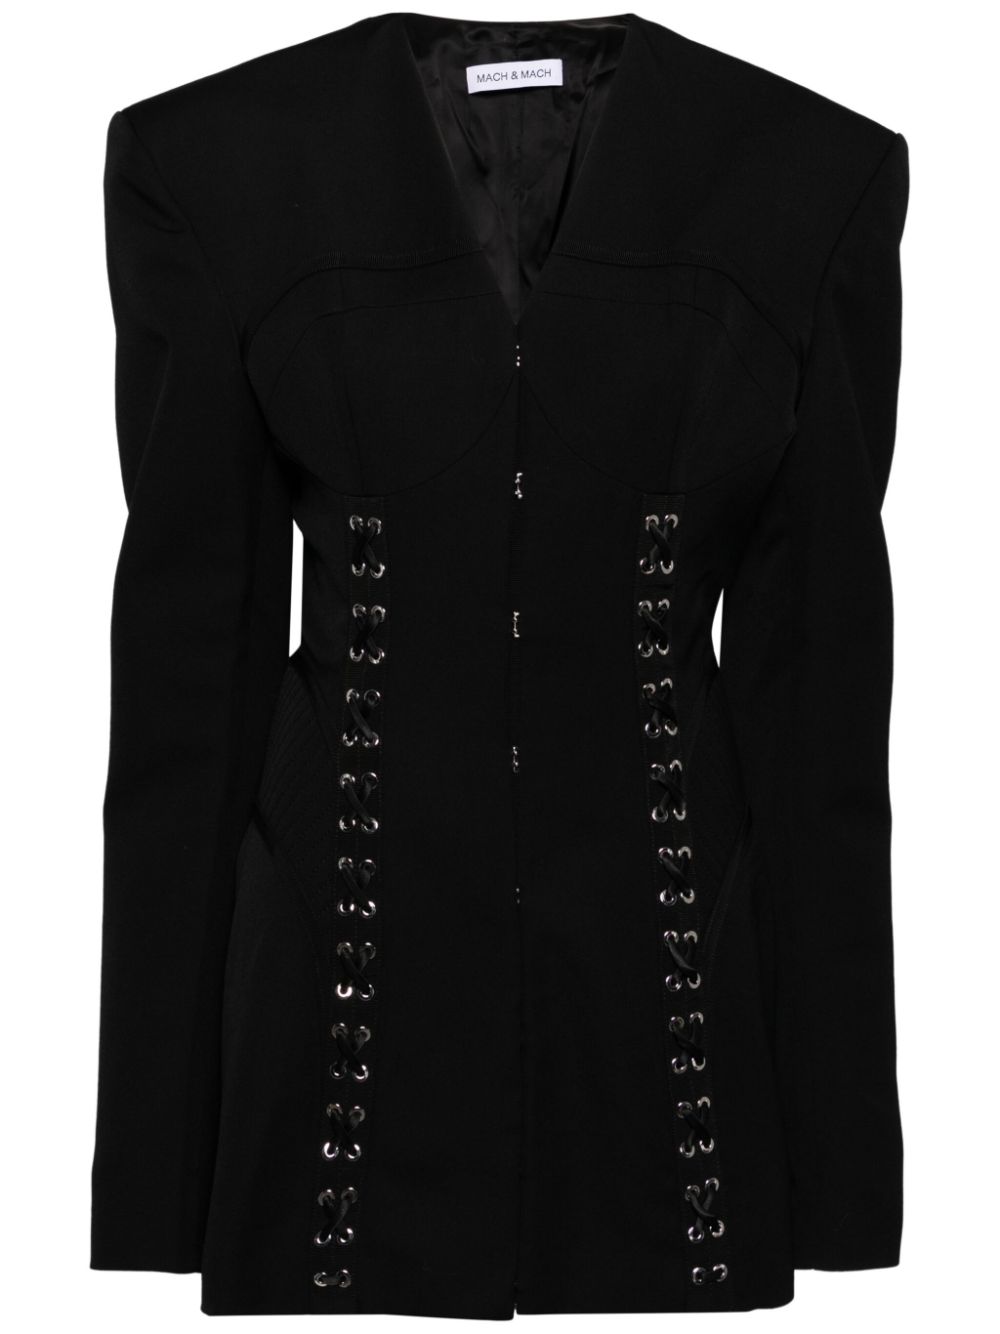 Image 1 of MACH & MACH corset hook-and-eye wool mini dress